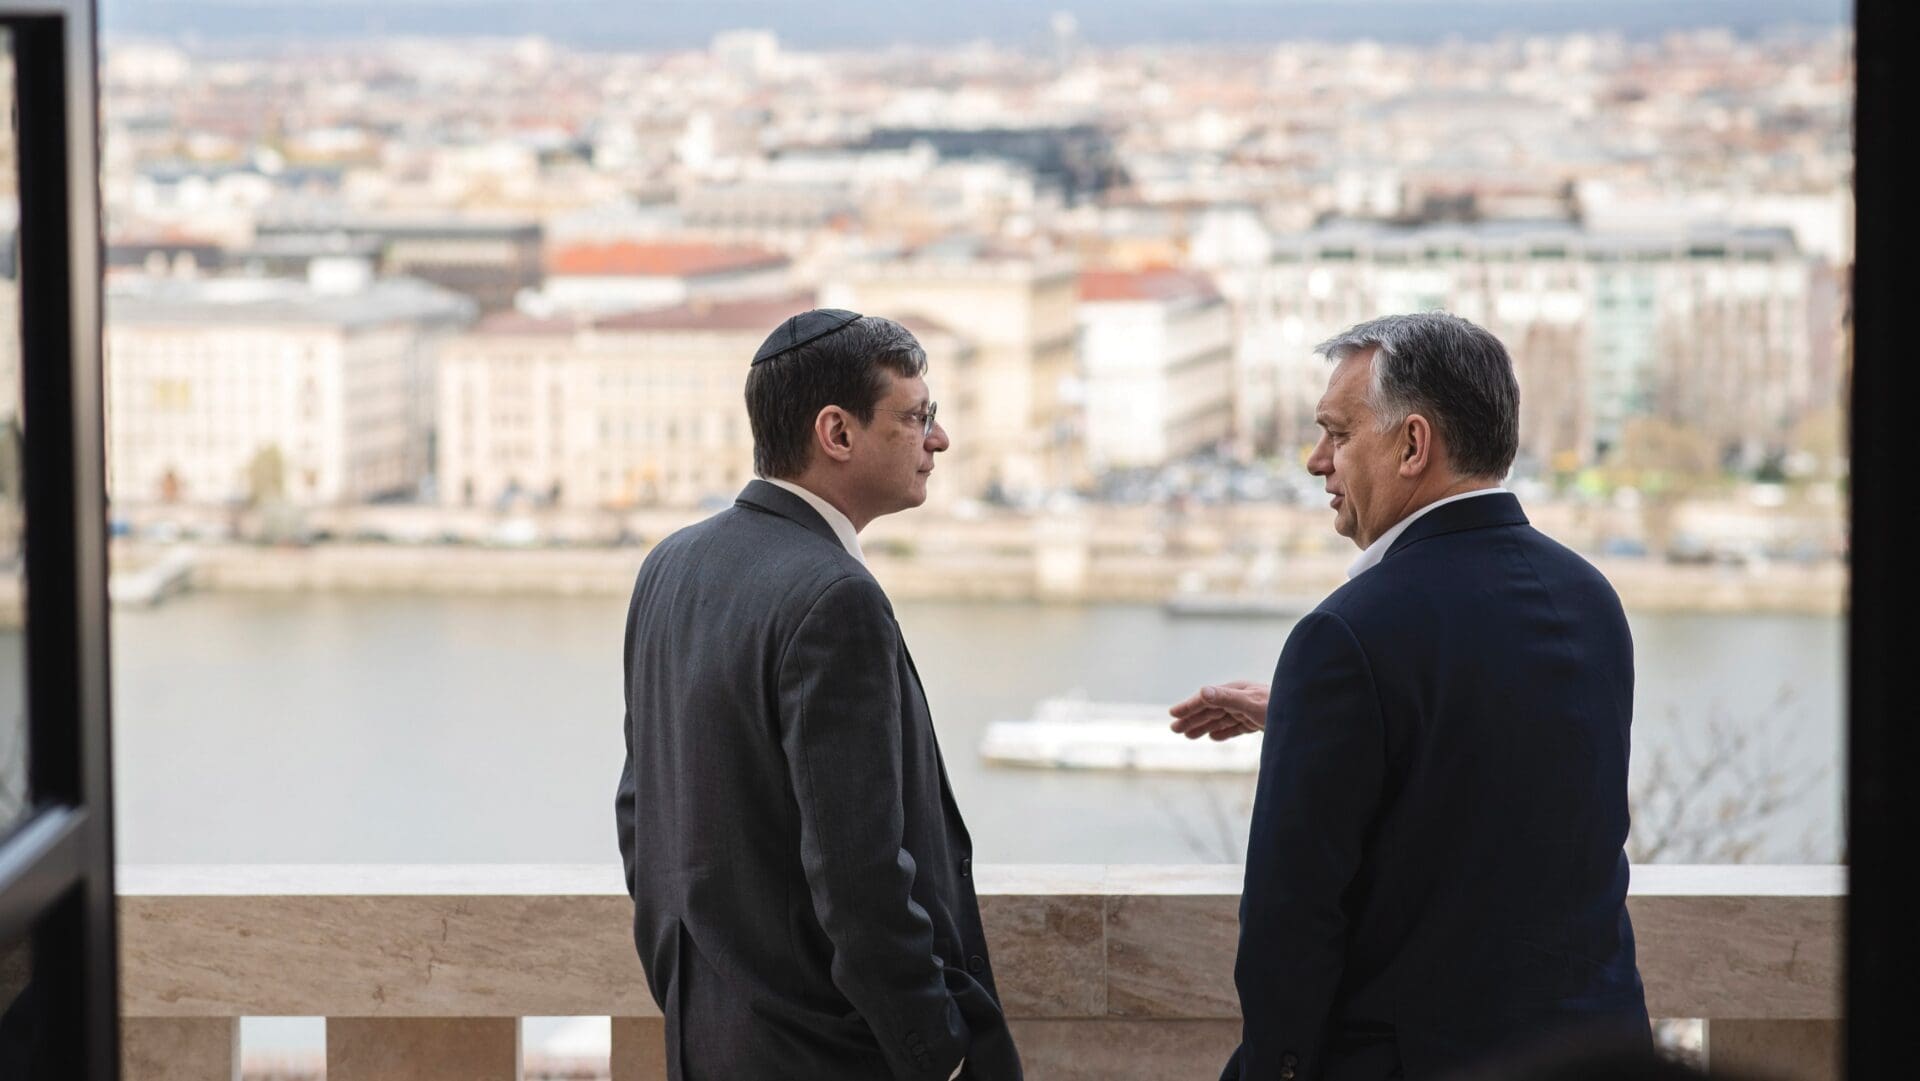 Viktor Orbán receives Israeli philosopher Yoram Hazony, President of the Herzl Institute in Jerusalem